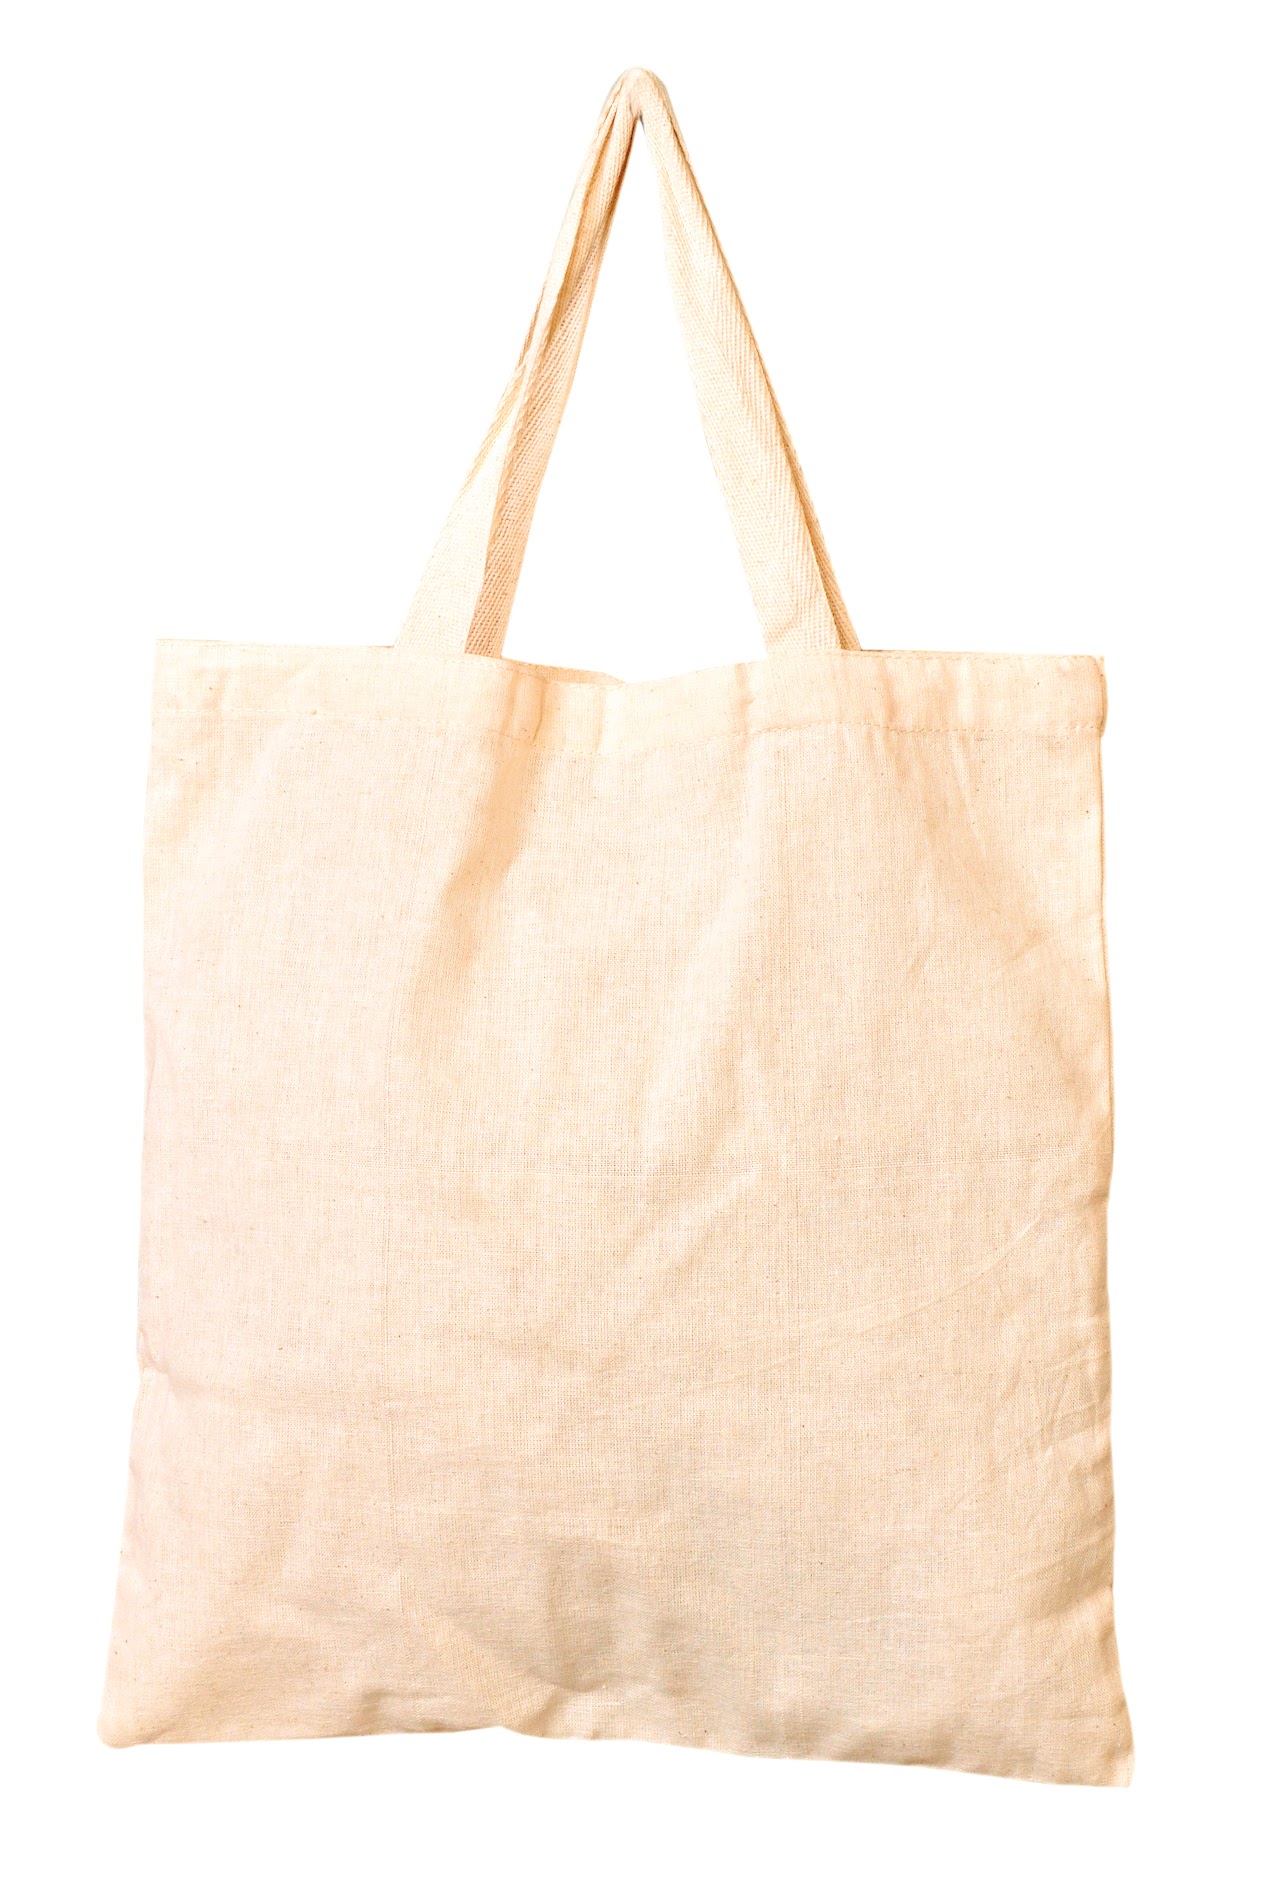 Cotton Tote bag Wholesale tote bag Heat Transfer, Printing, DIY, Reusable  Natural Tote Bag | 100% Cotton Canvas Tote Bags | Canvas tote bag |  Leather, Reusable, Eco-friendly tote bag | Tote